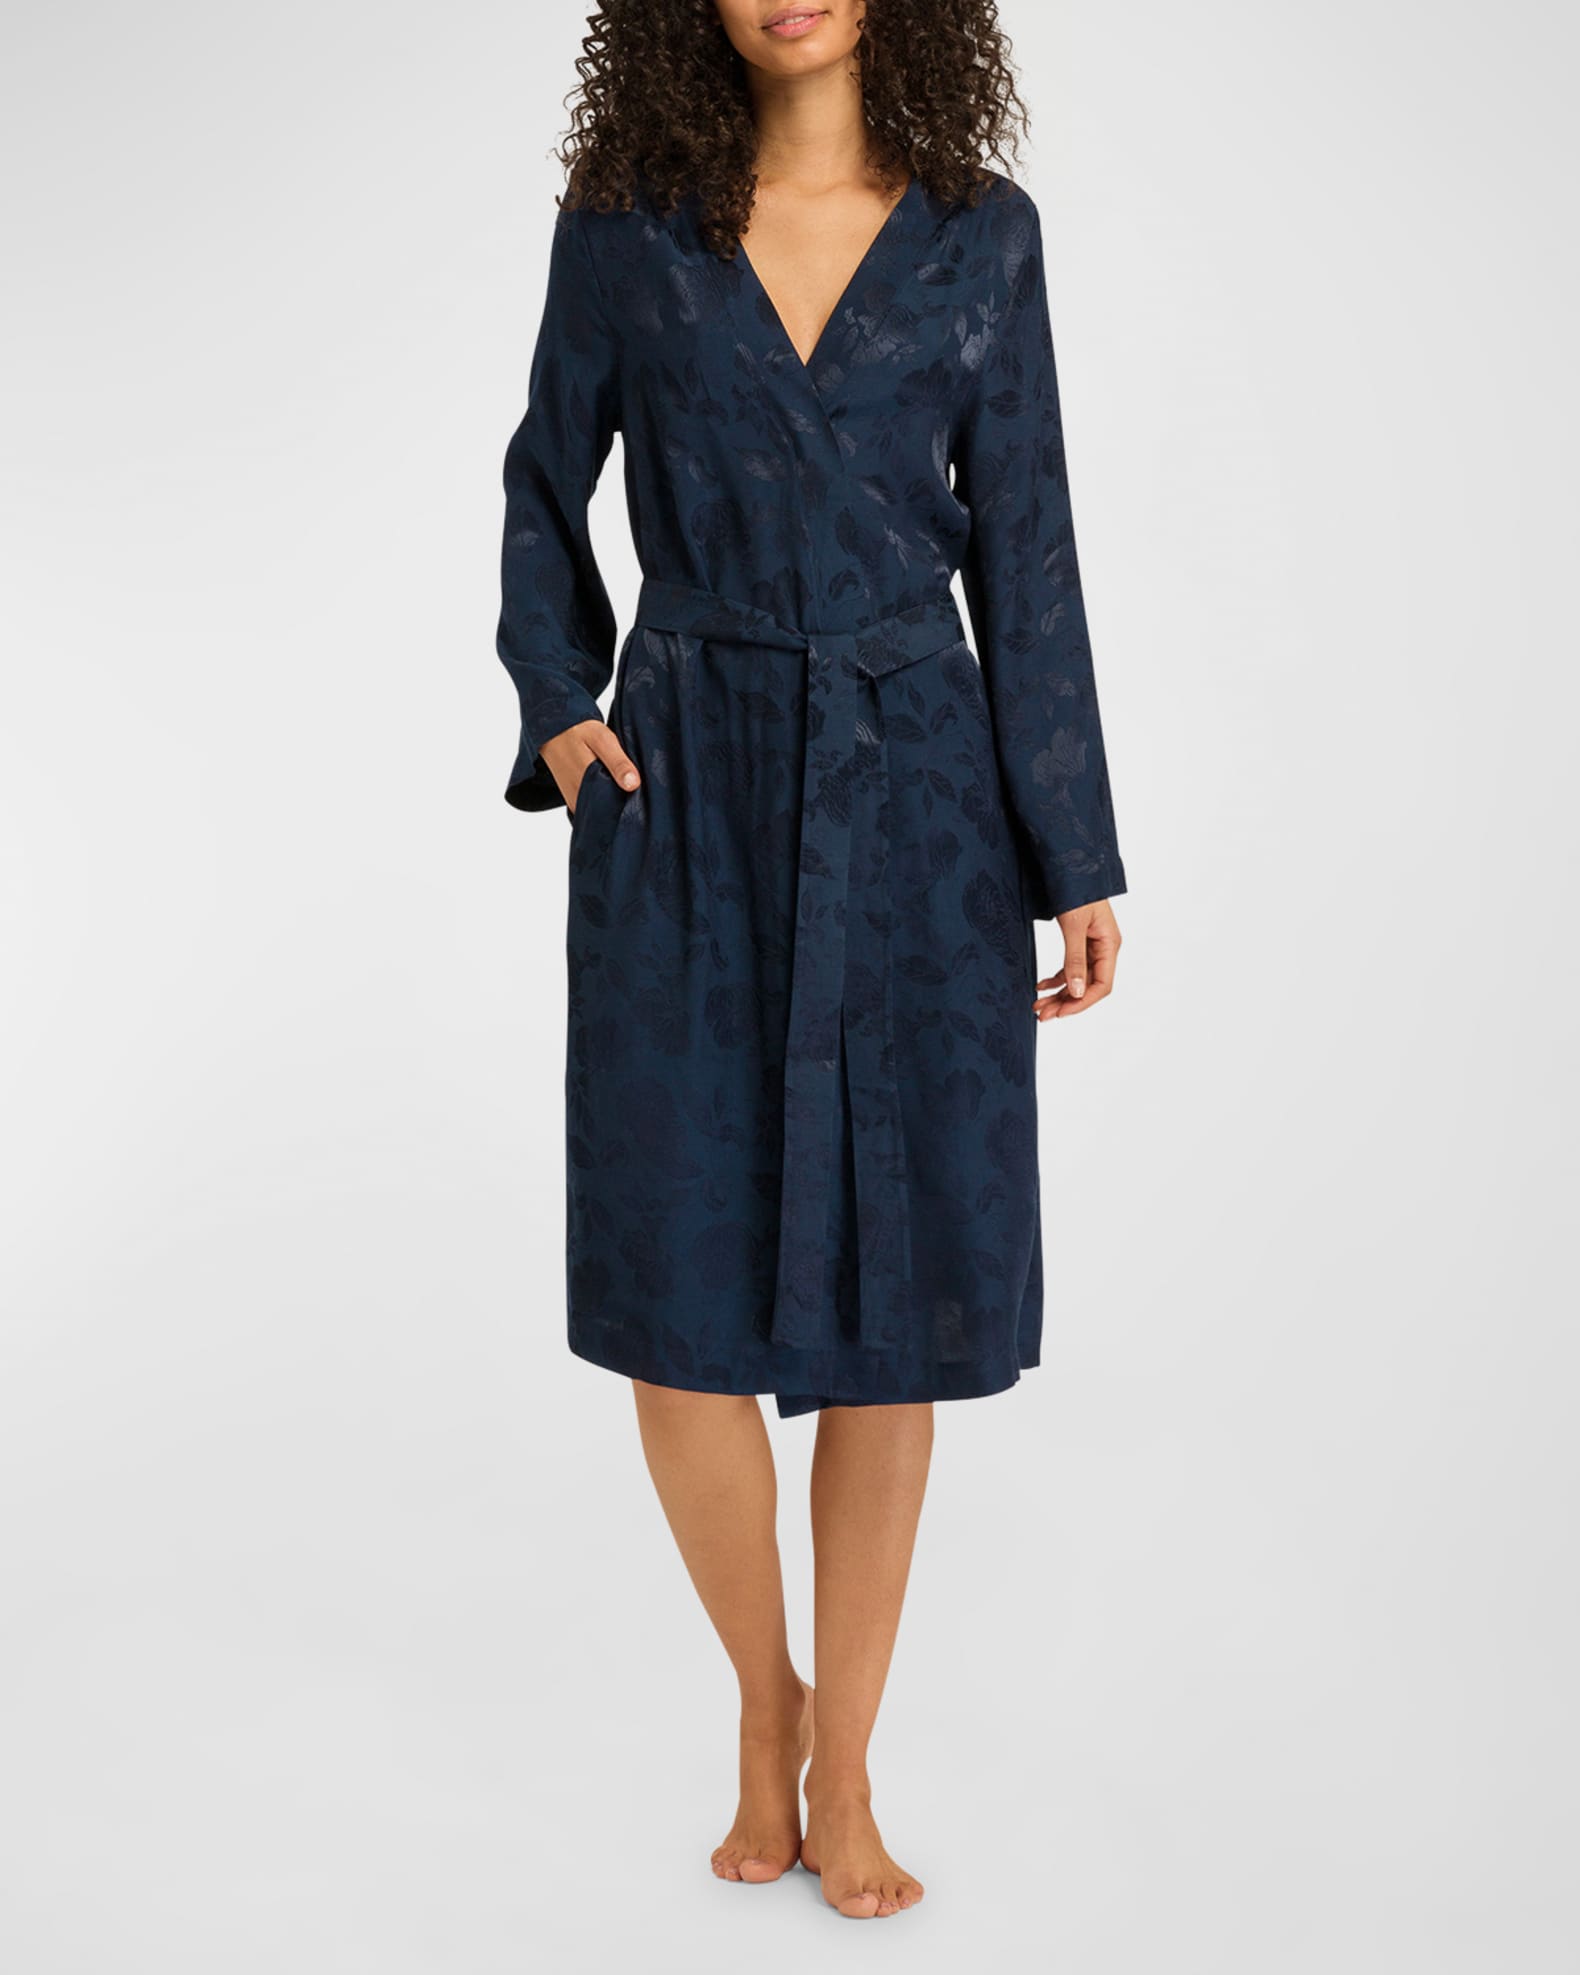 Hanro Valene Floral Jacquard Robe | Neiman Marcus